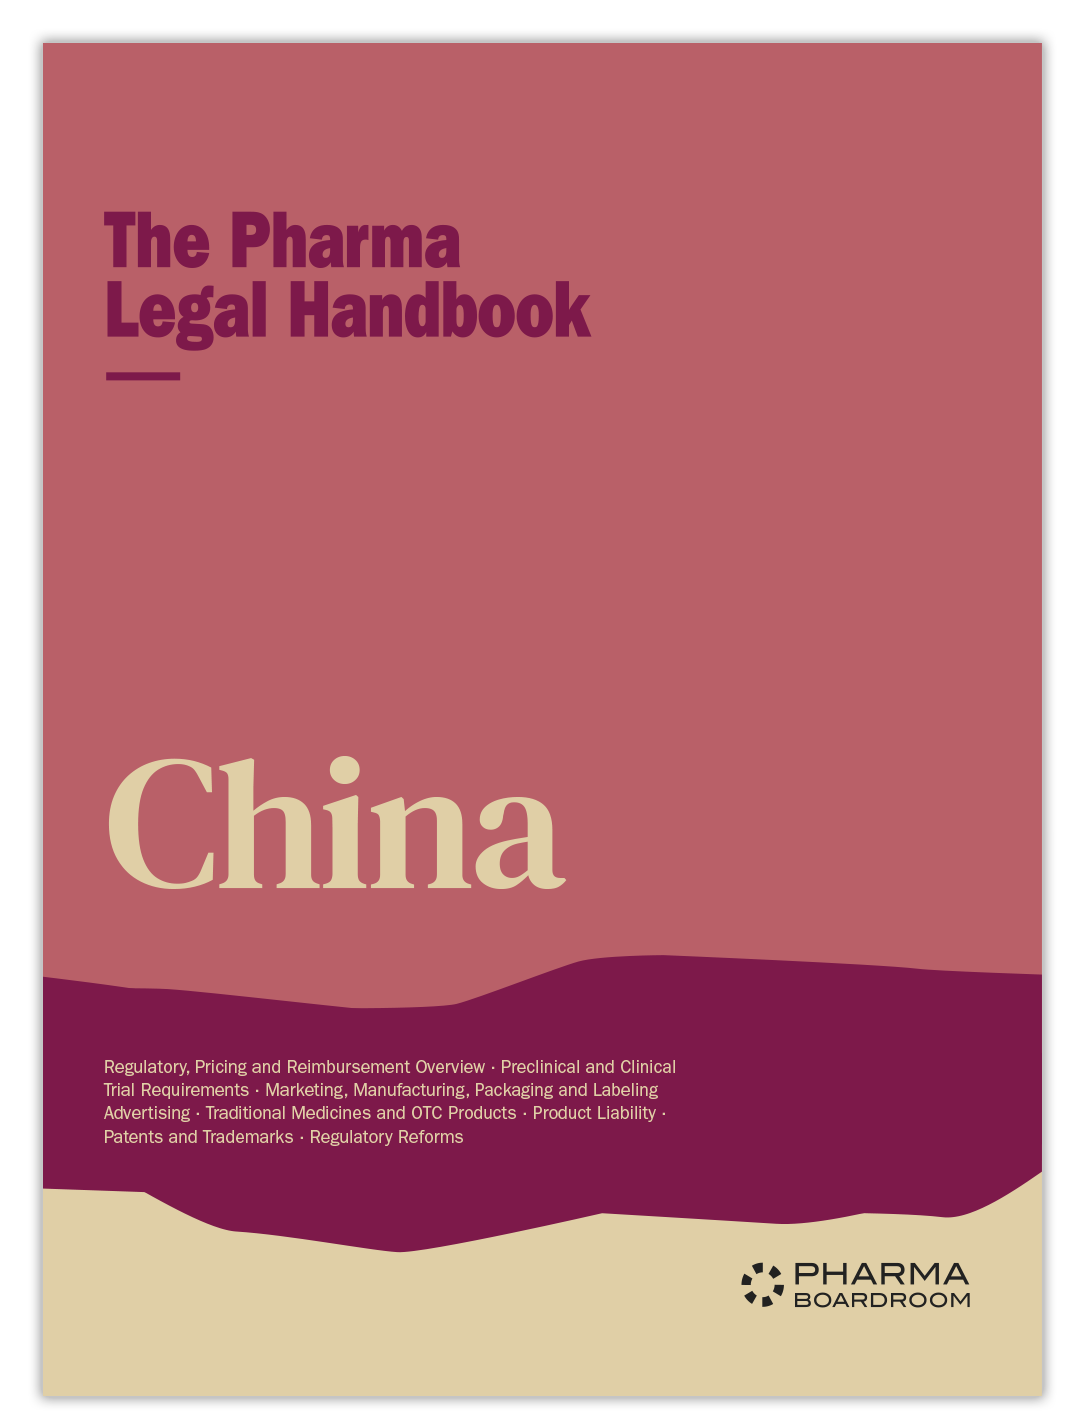 The Pharma Legal Handbook: China